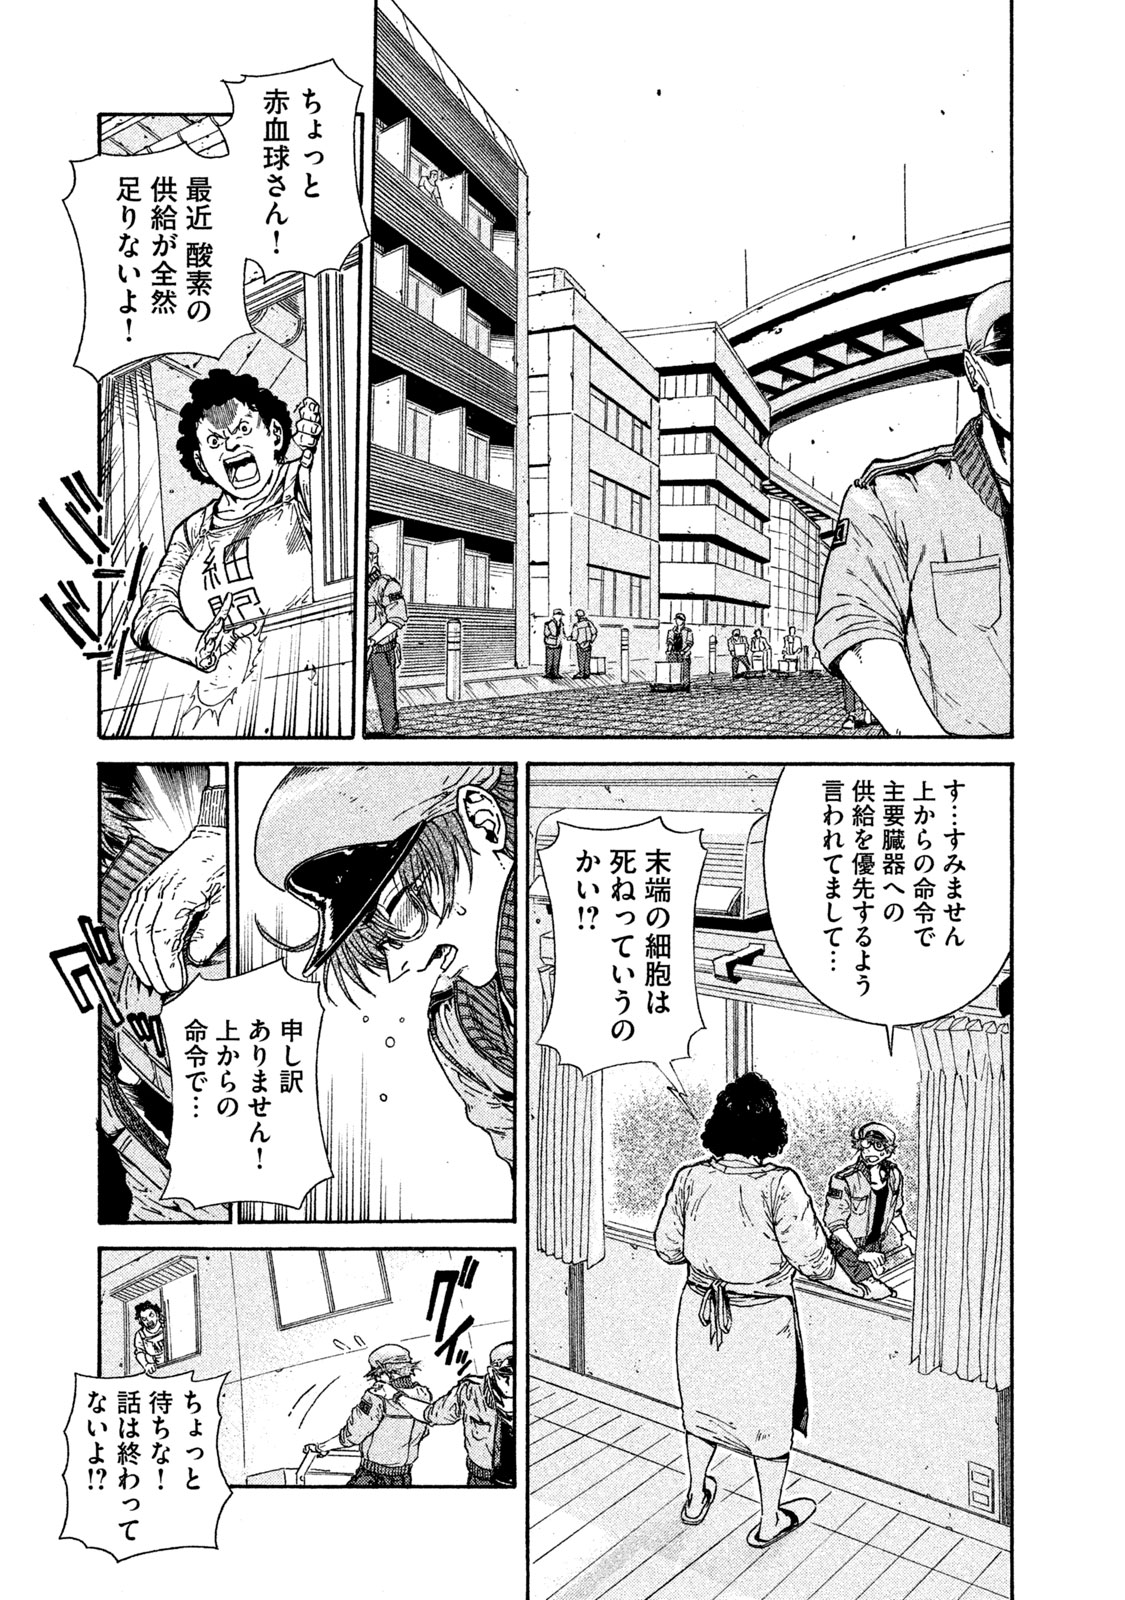 Hataraku Saibou BLACK - Chapter 1 - Page 9